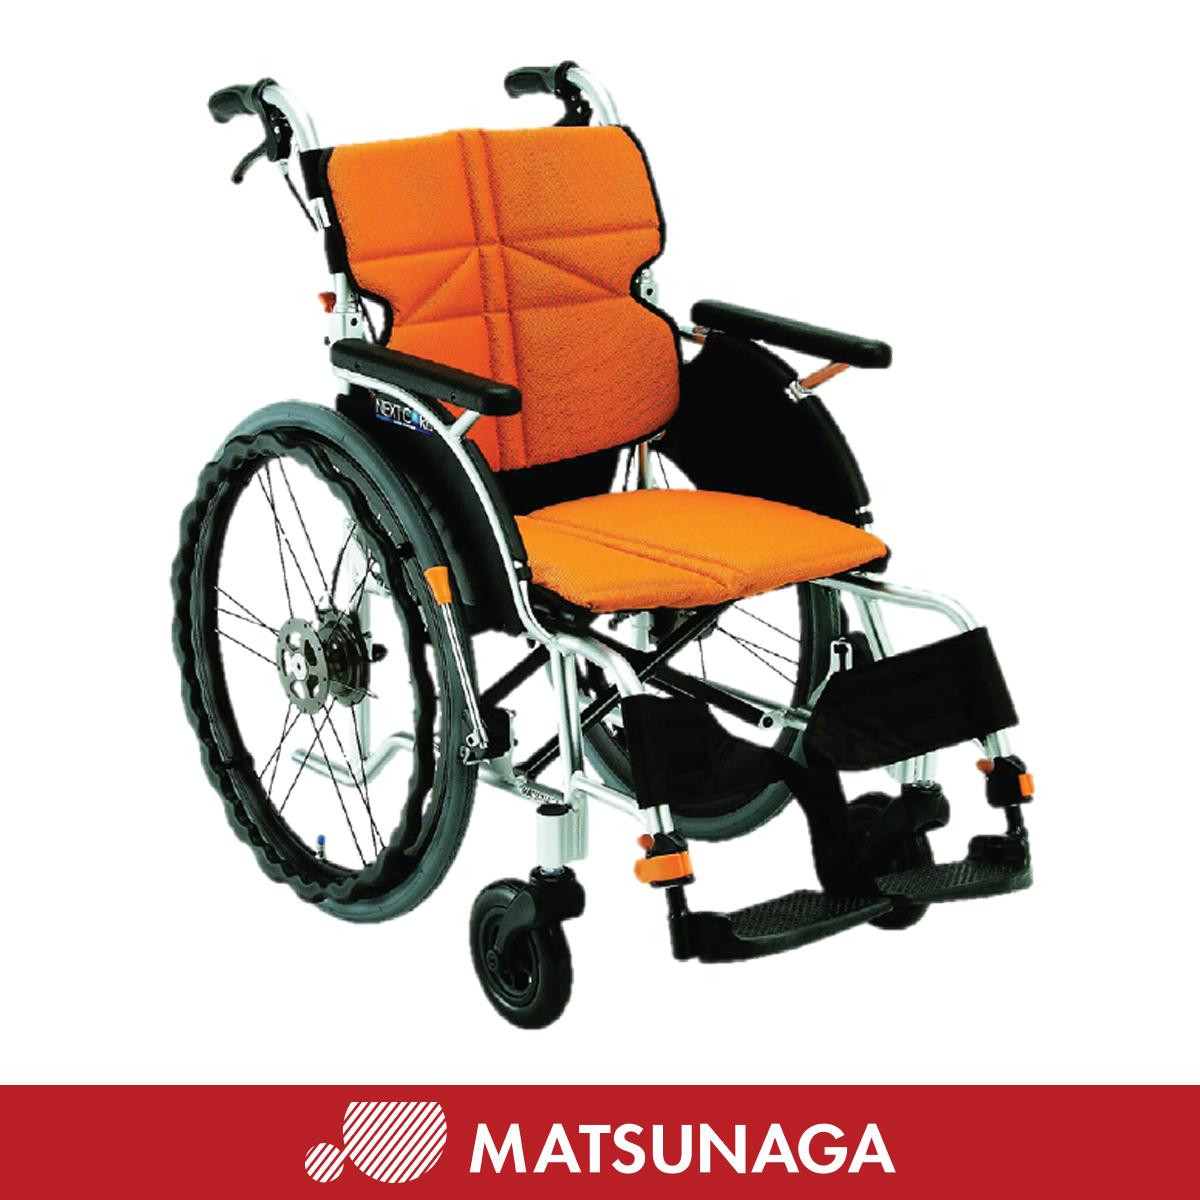 Matsunaga Wheelchair with Big Wheel Type (NEXT-11B) | Lazada PH